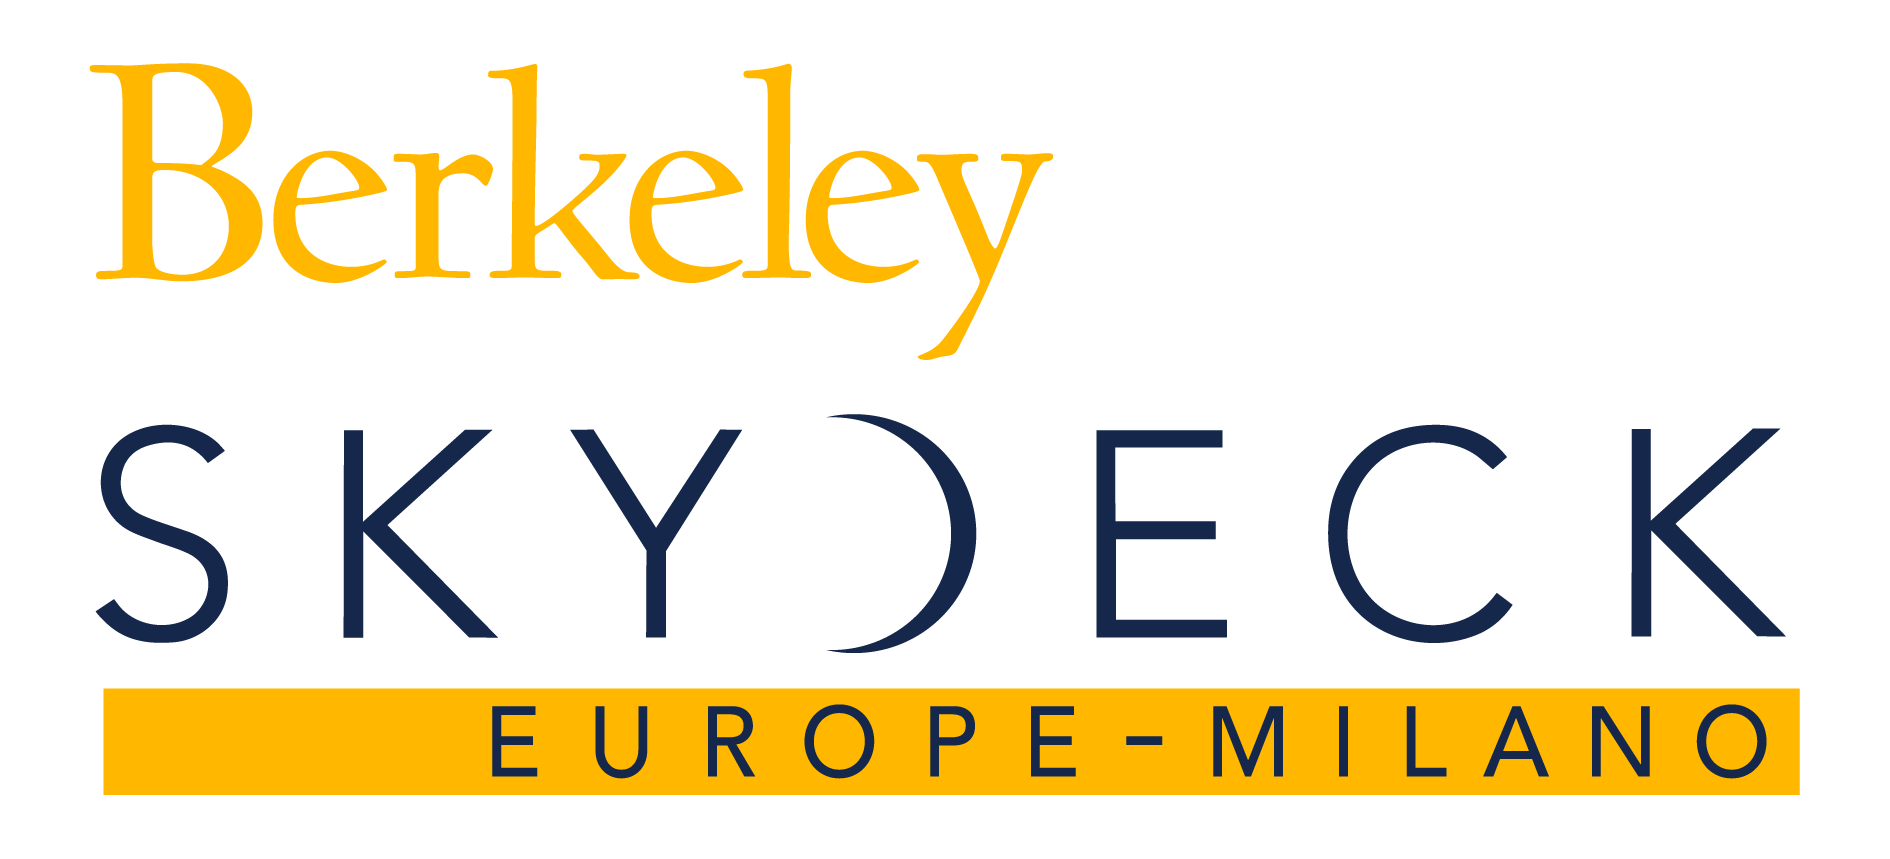 Berkeley SkyDeck Europe